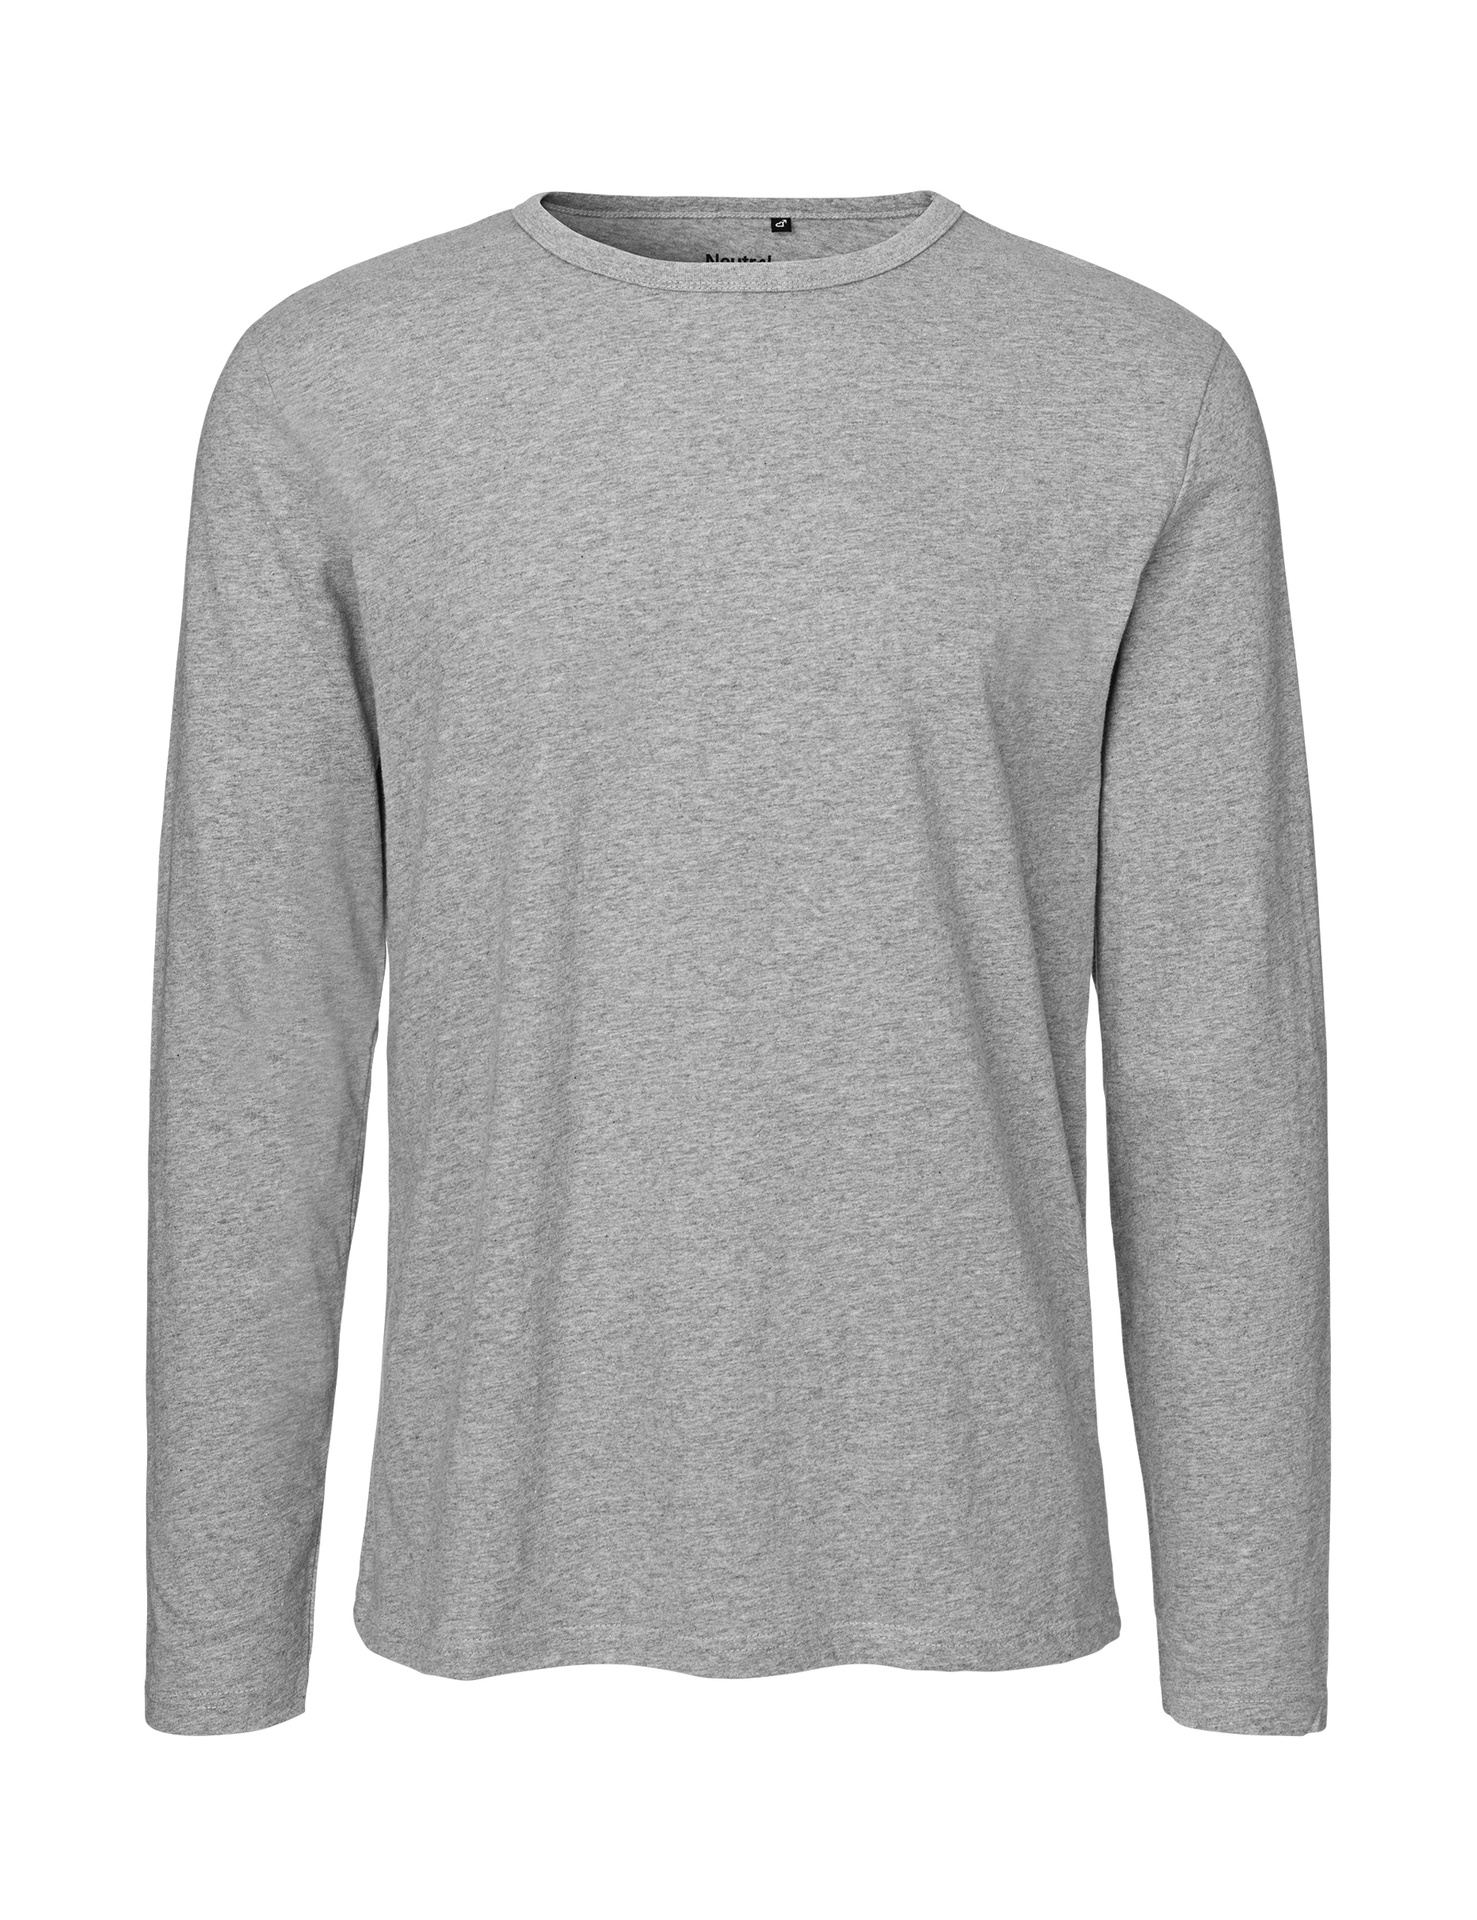 [PR/02399] Mens Long Sleeve T-Shirt (Sport Grey 21, M)